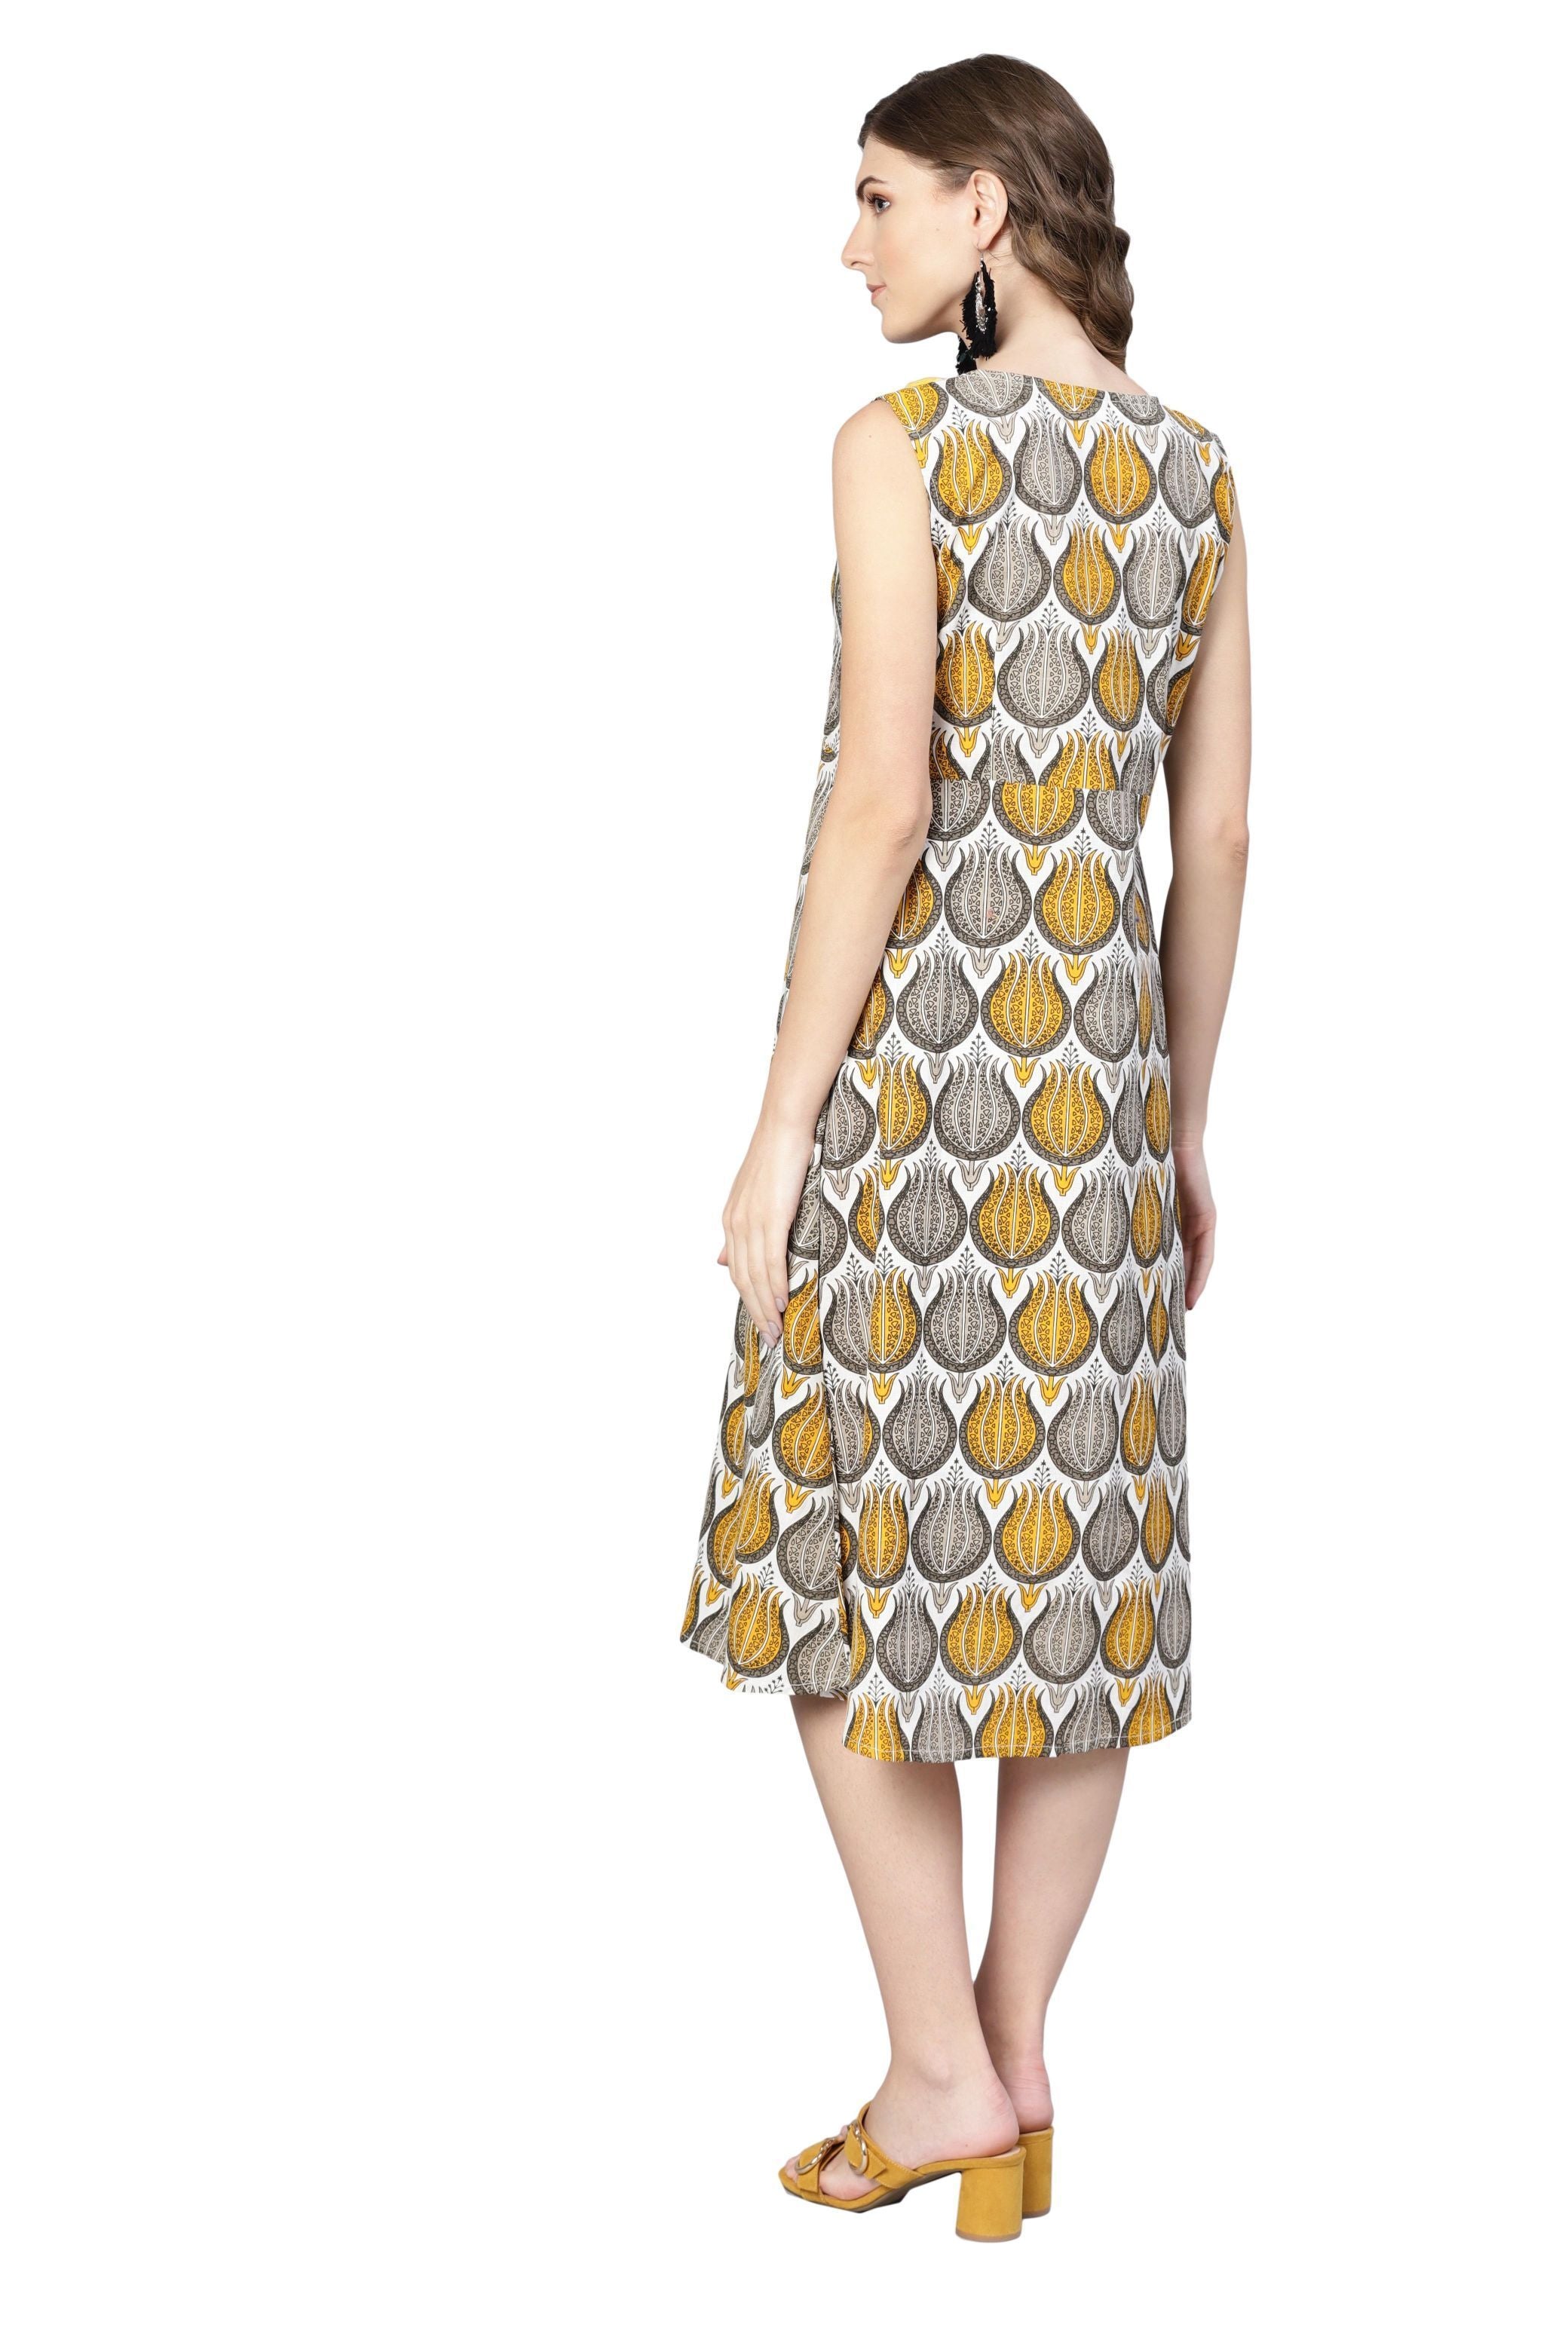 Women's Multi Rayon Printed Sleveeless Round Neck Dress - Myshka